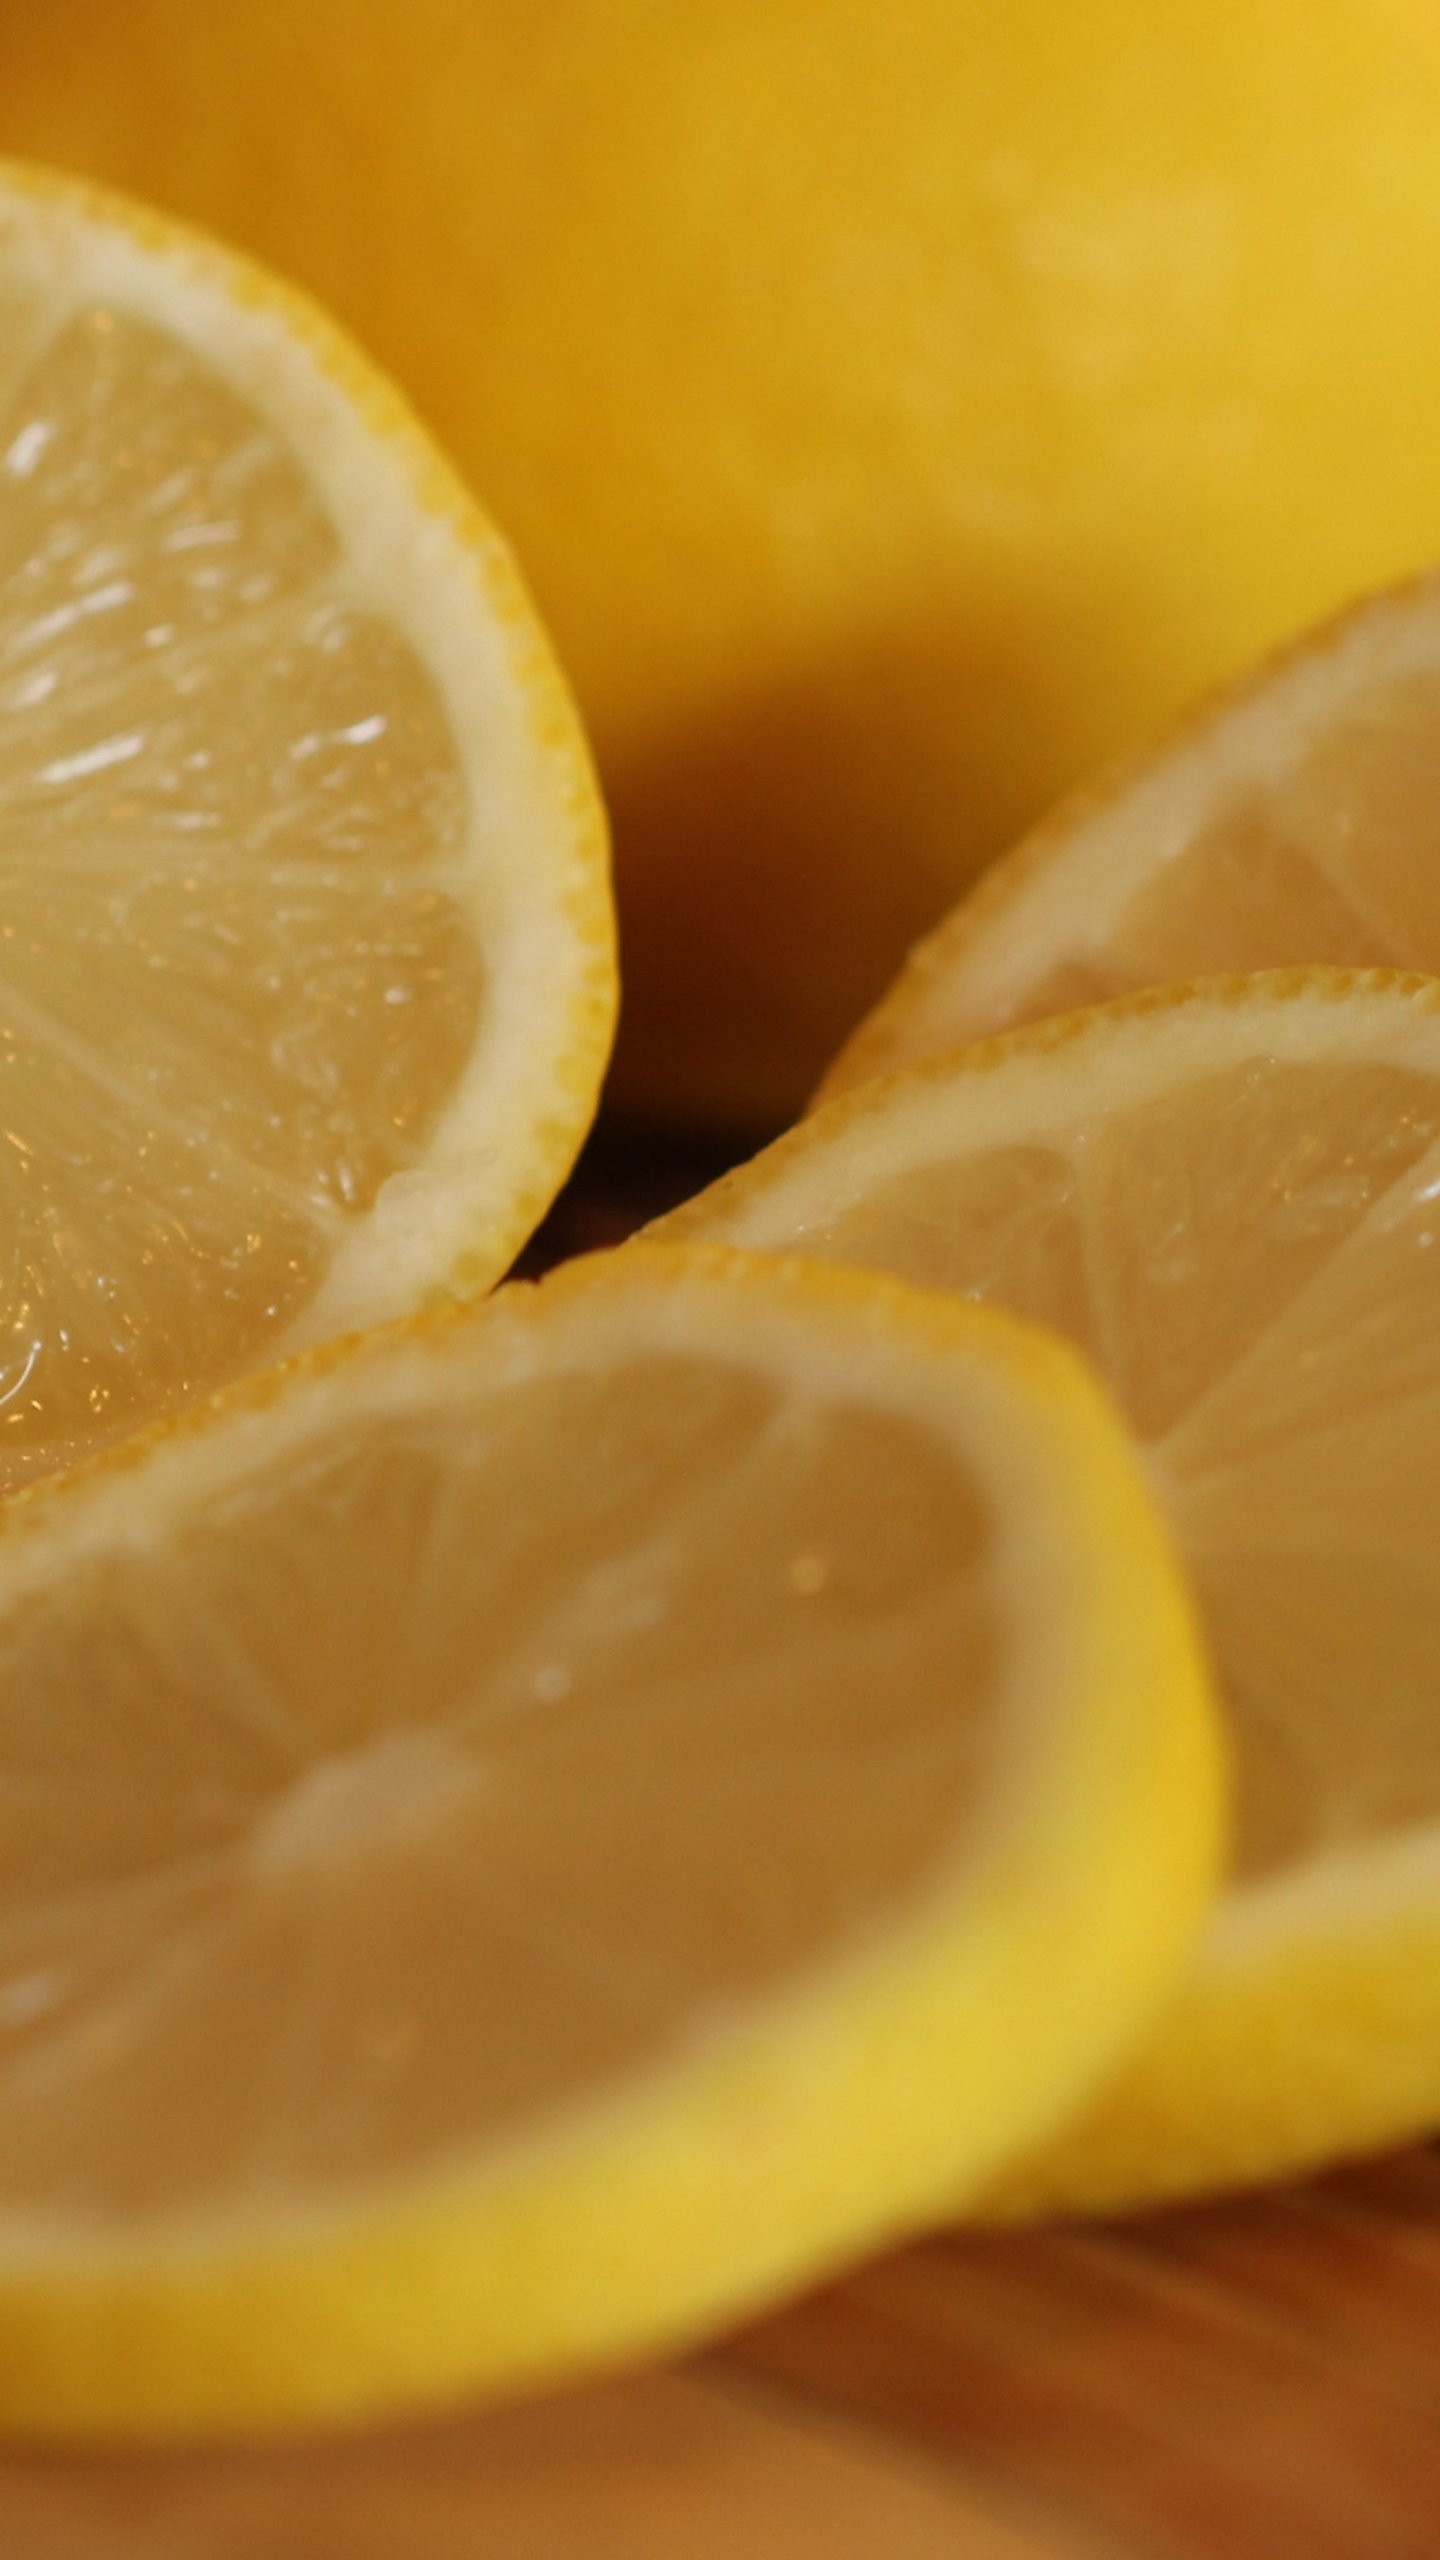 Fresh Lemons Wallpaper - iPhone, Android & Desktop Backgrounds